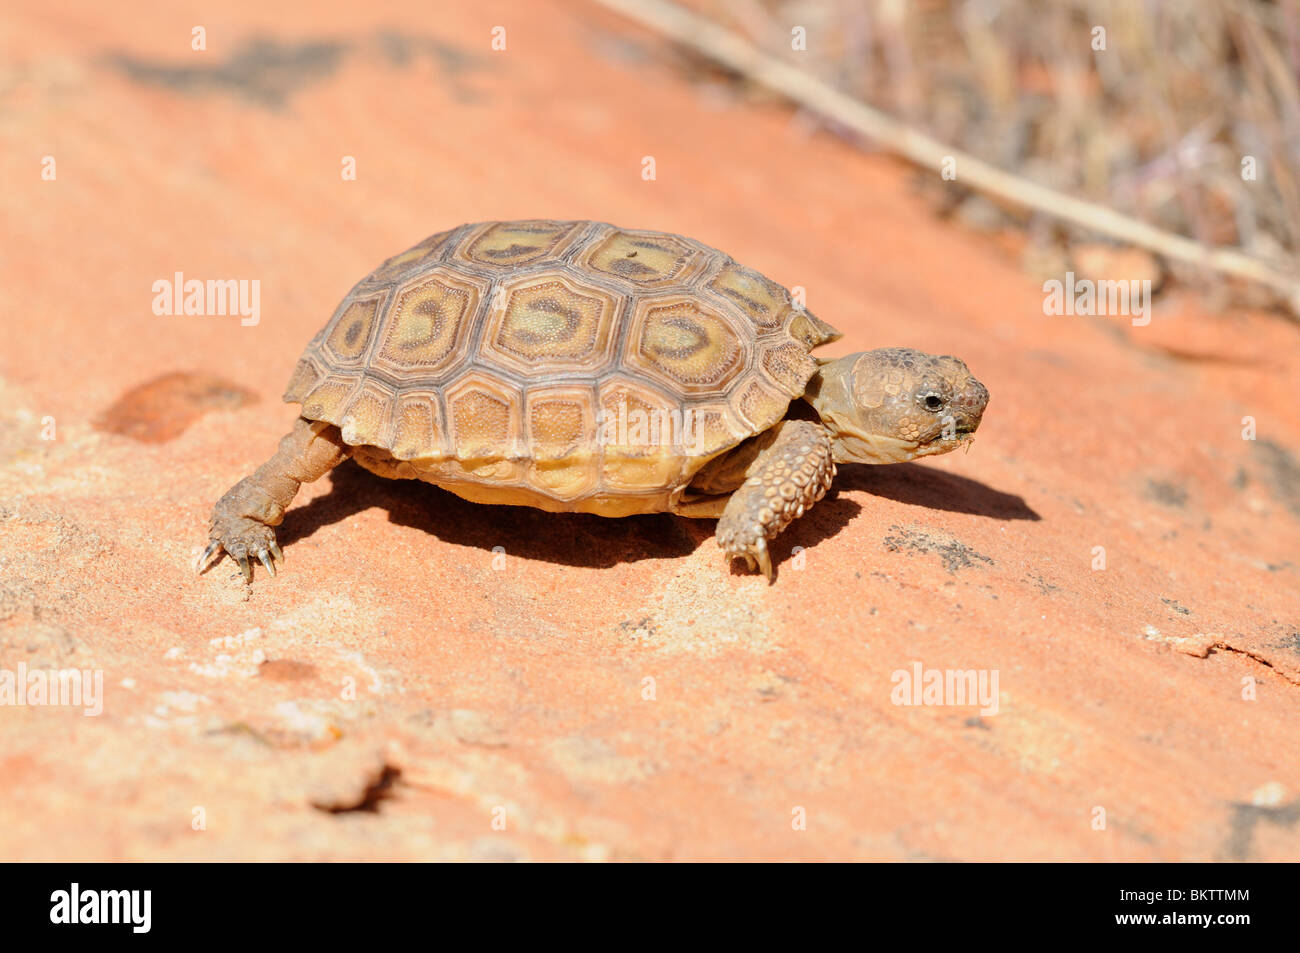 stock-photo-of-a-baby-mojave-desert-tortoise-gopherus-agassizii-walking-BKTTMM.jpg